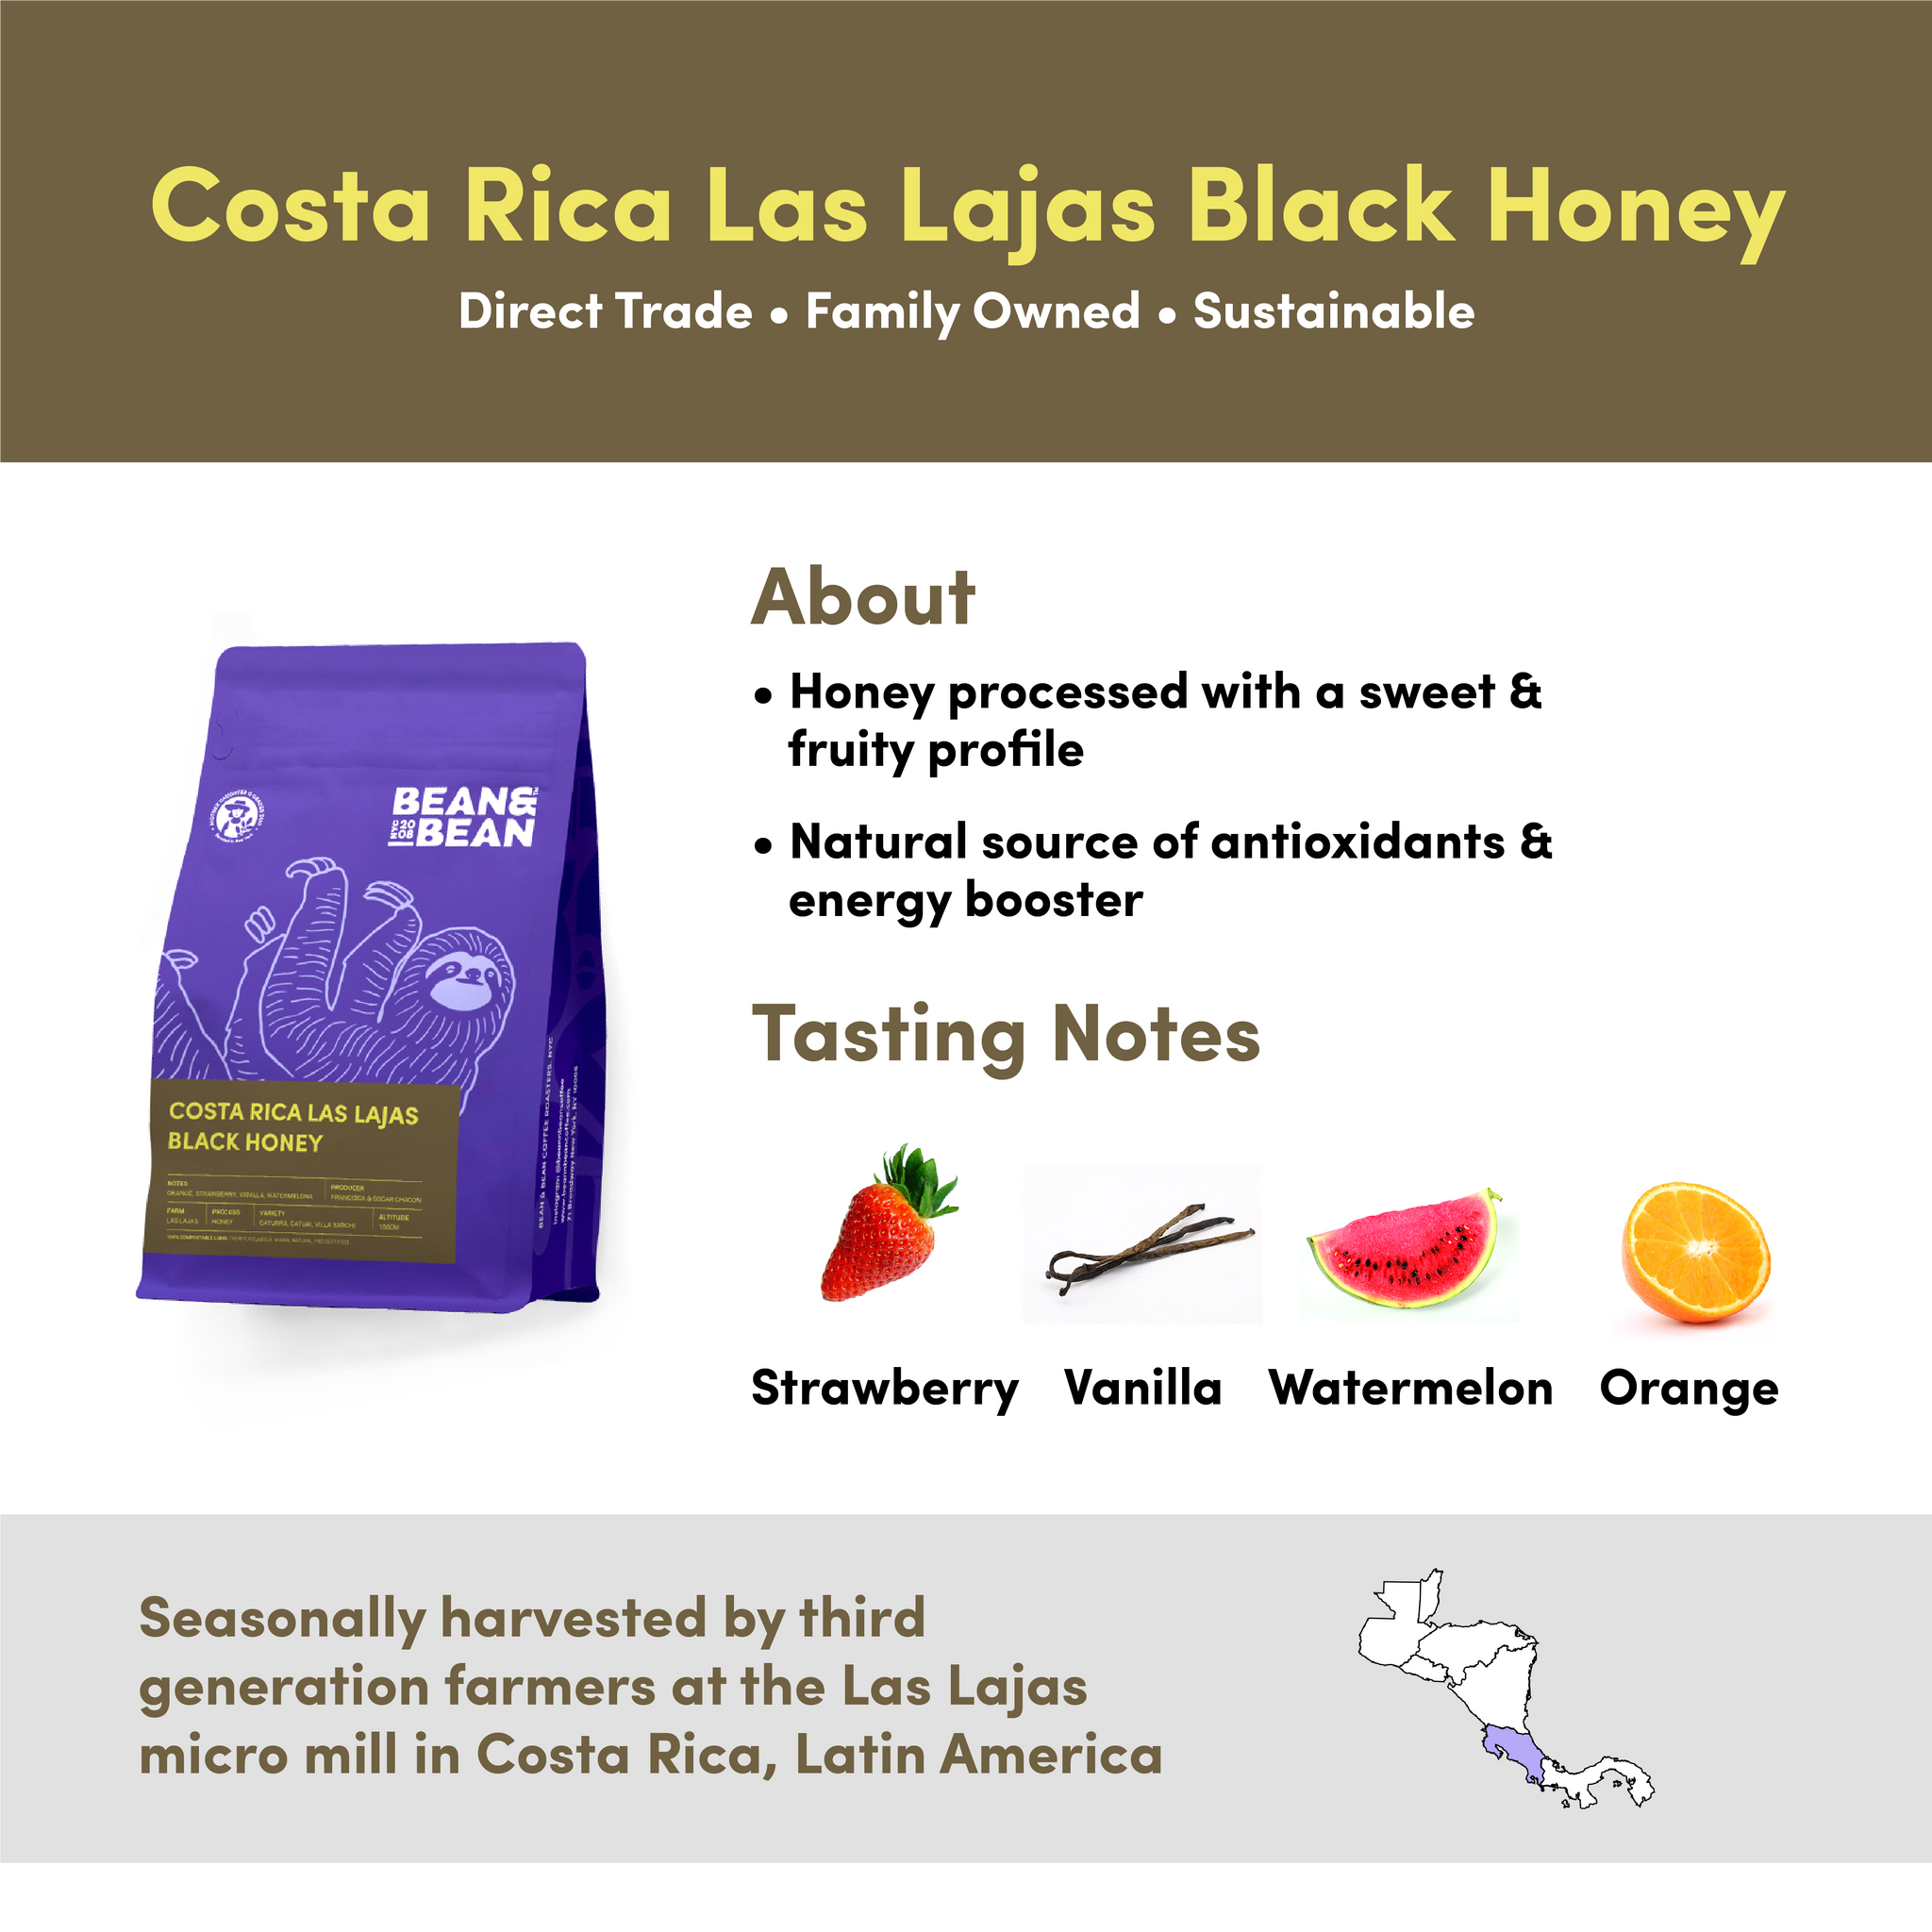 Costa Rica Las Lajas Black Honey